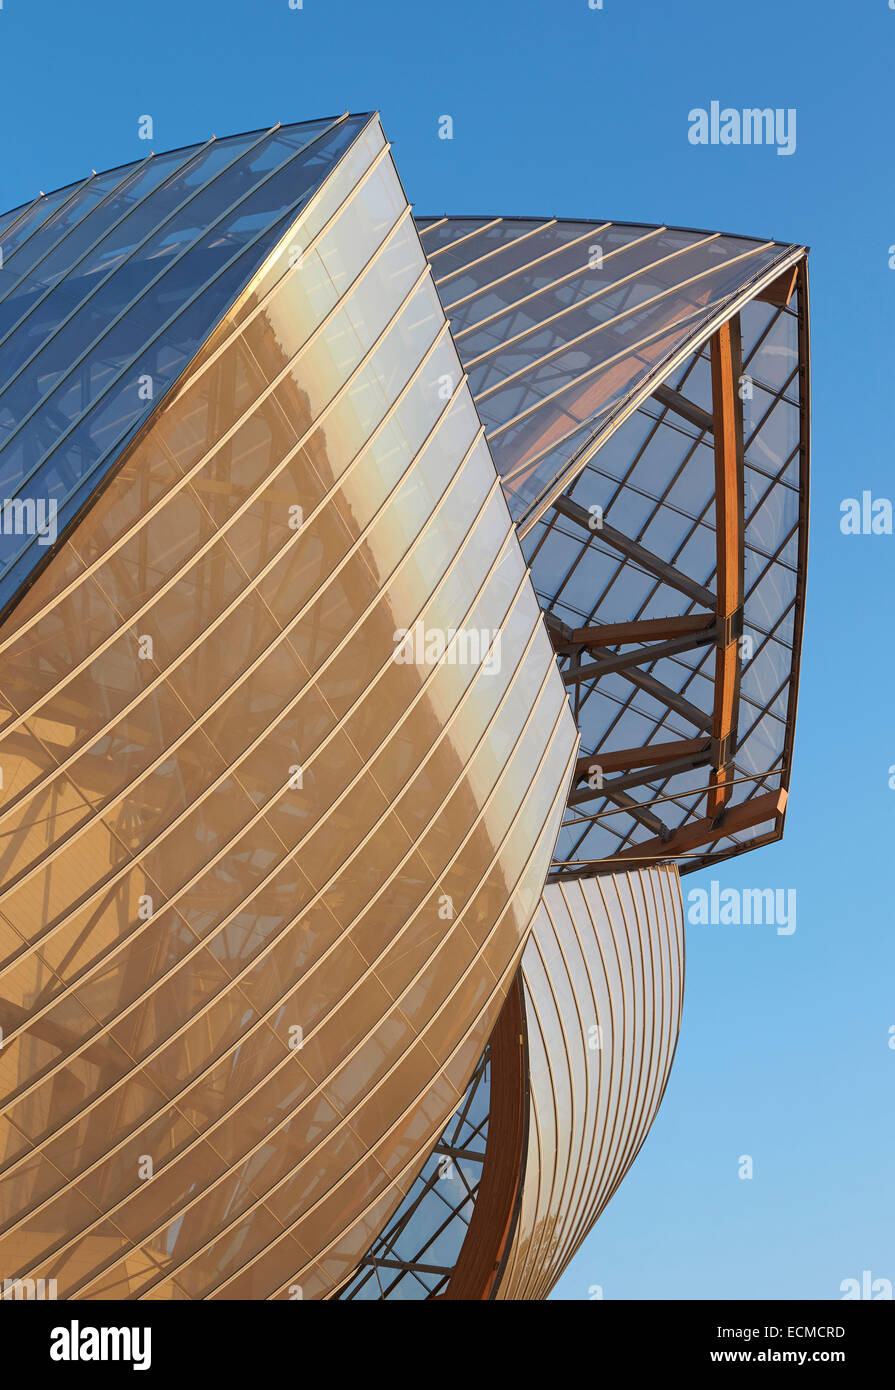 Fondation Louis Vuitton, Paris, France. Architect: Gehry Partners LLP, 2014. Sailboat-like facade elevation. Stock Photo